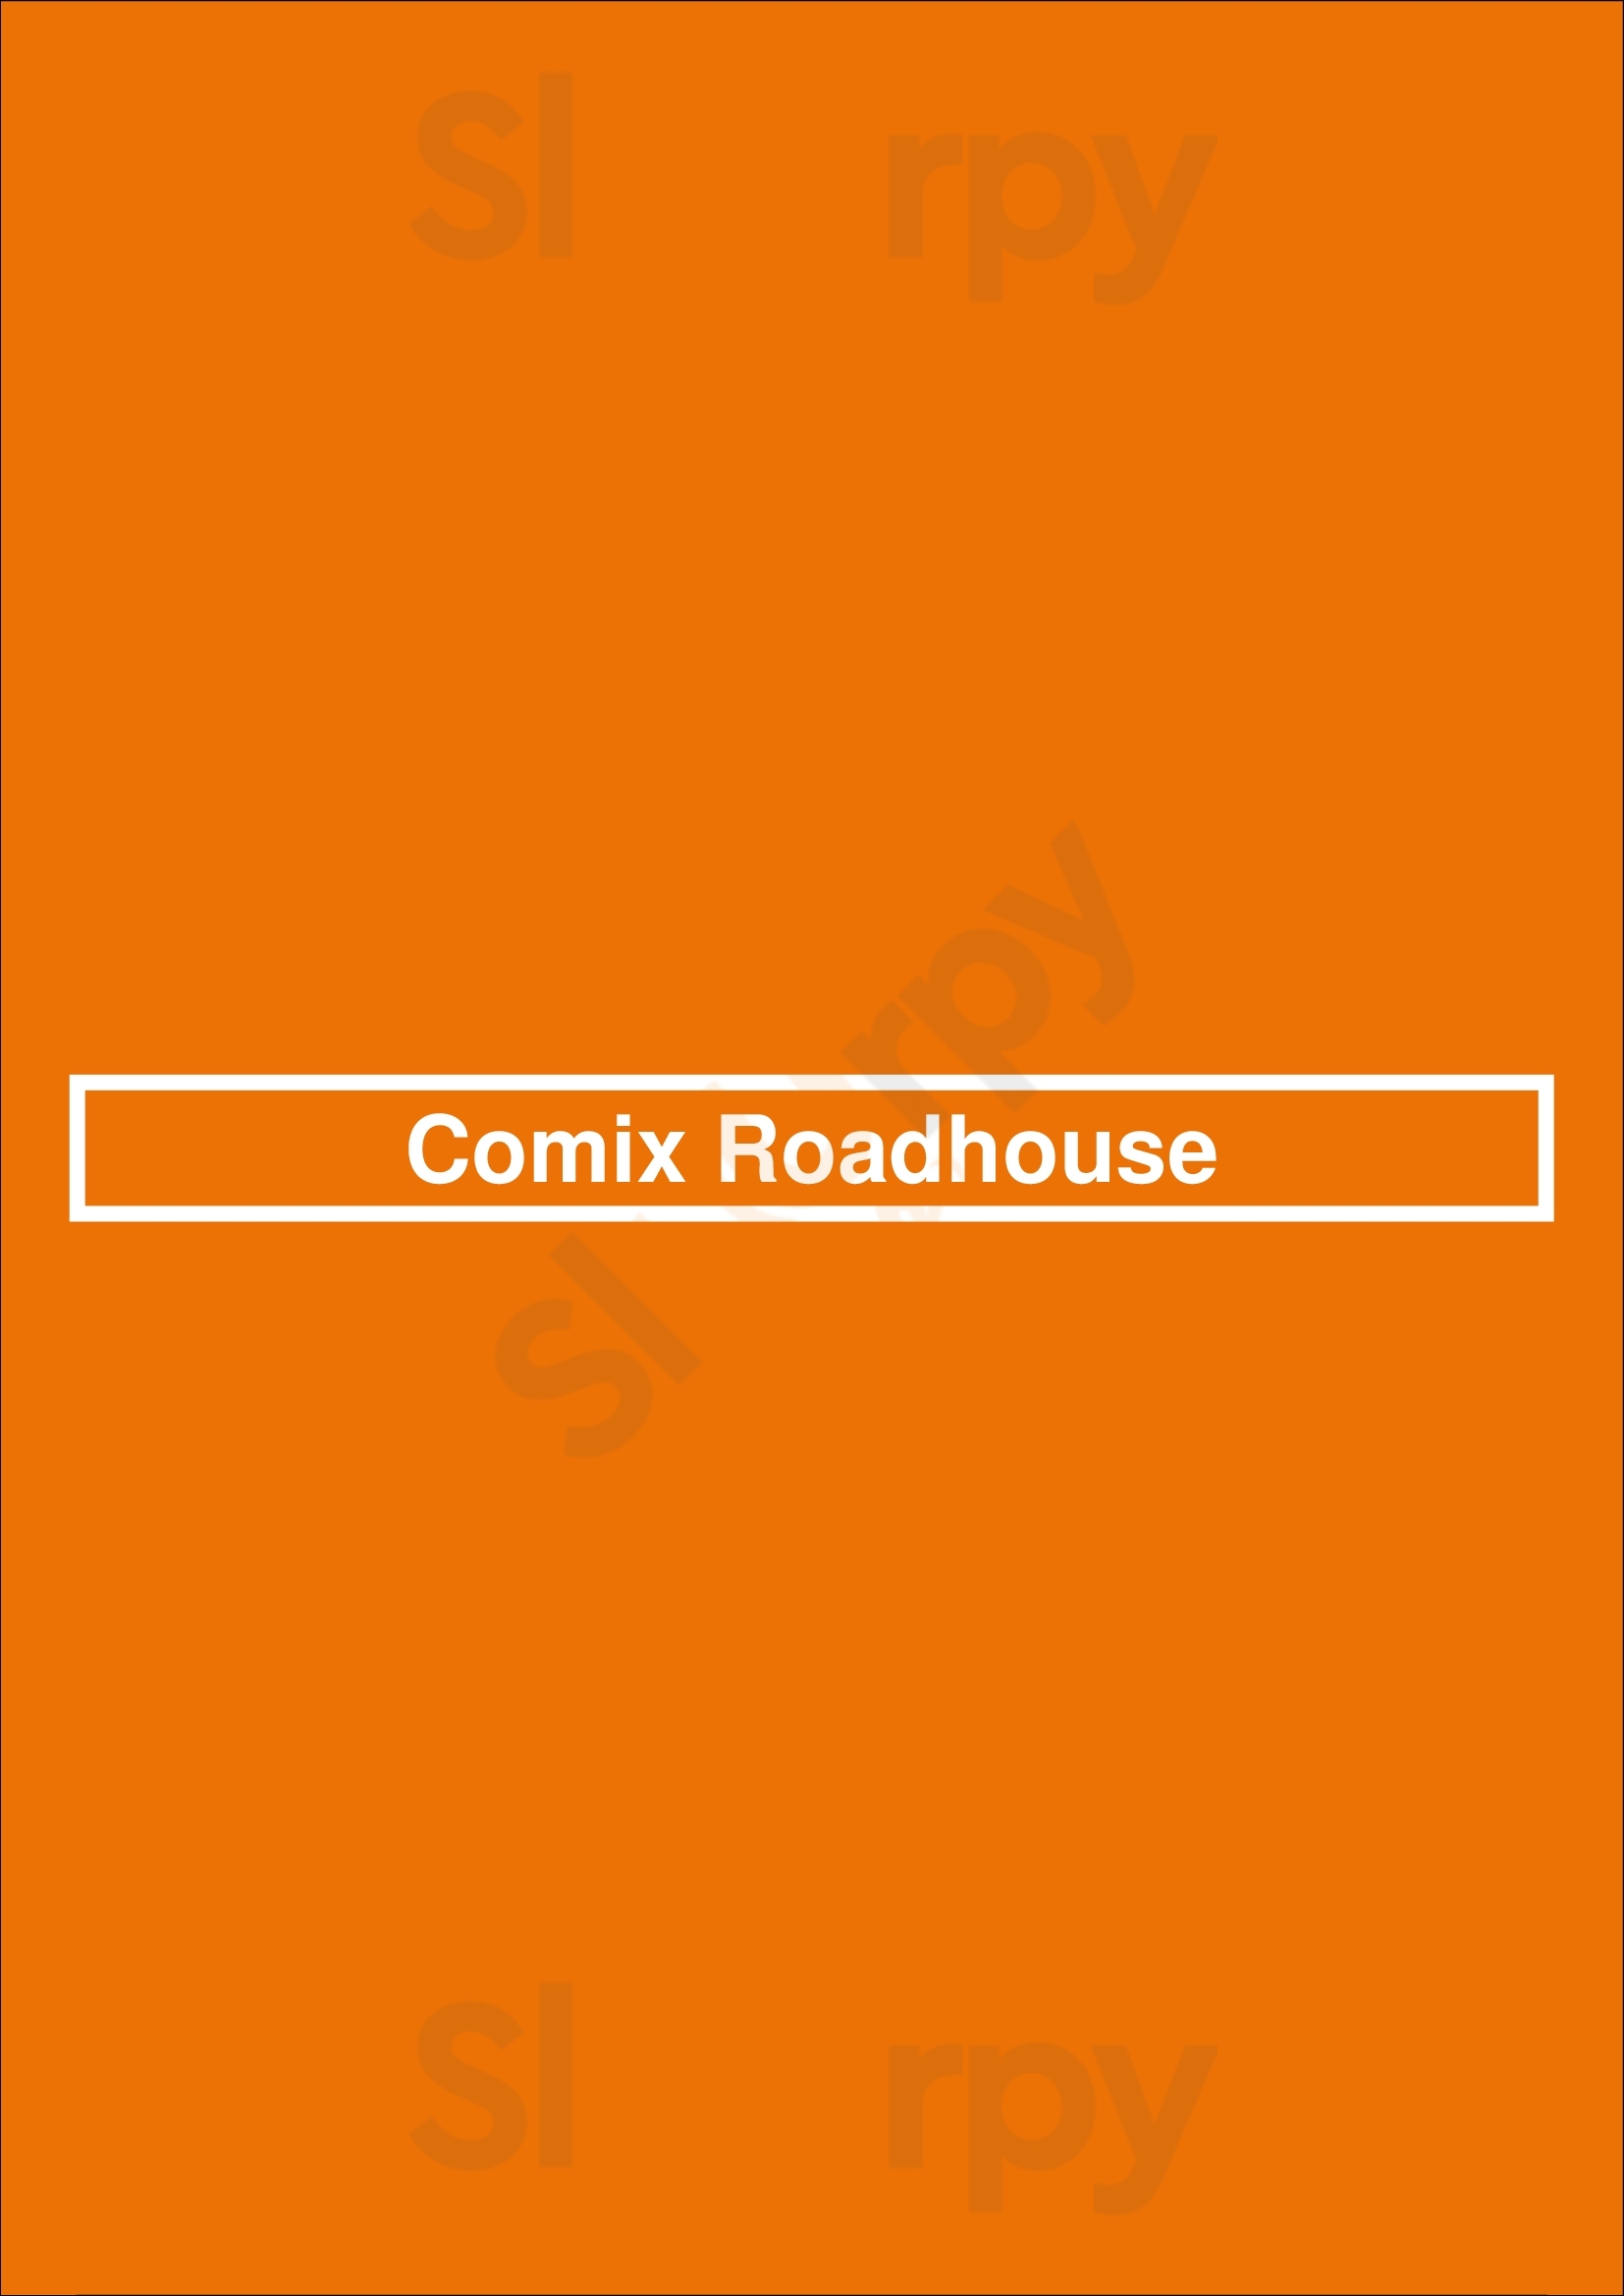 Comix Roadhouse Uncasville Menu - 1